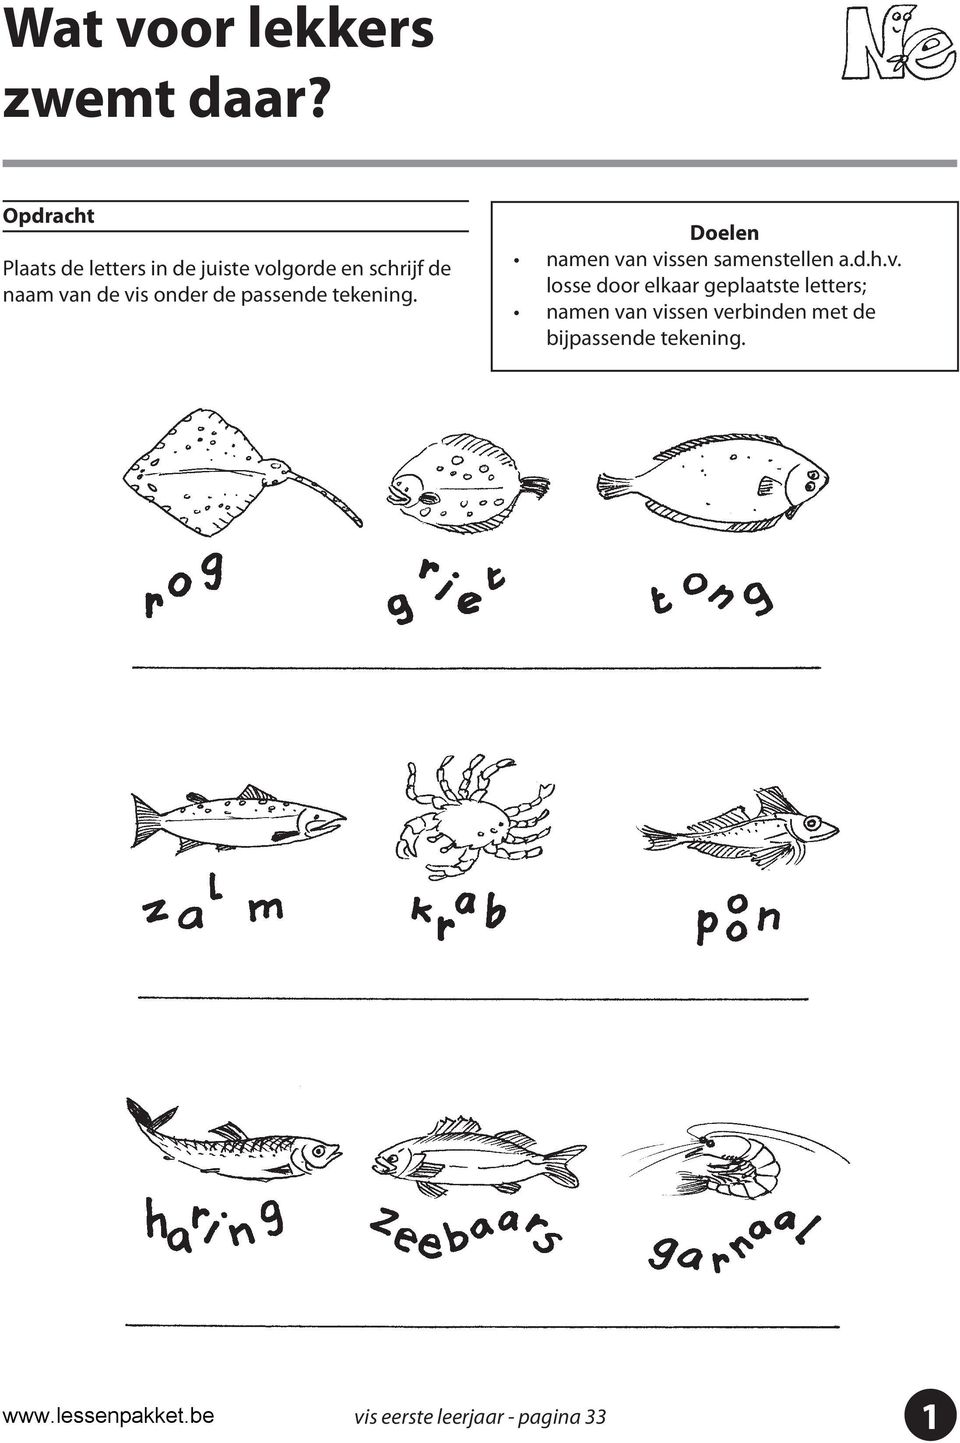 vis onder de passende tekening. namen van vissen samenstellen a.d.h.v.